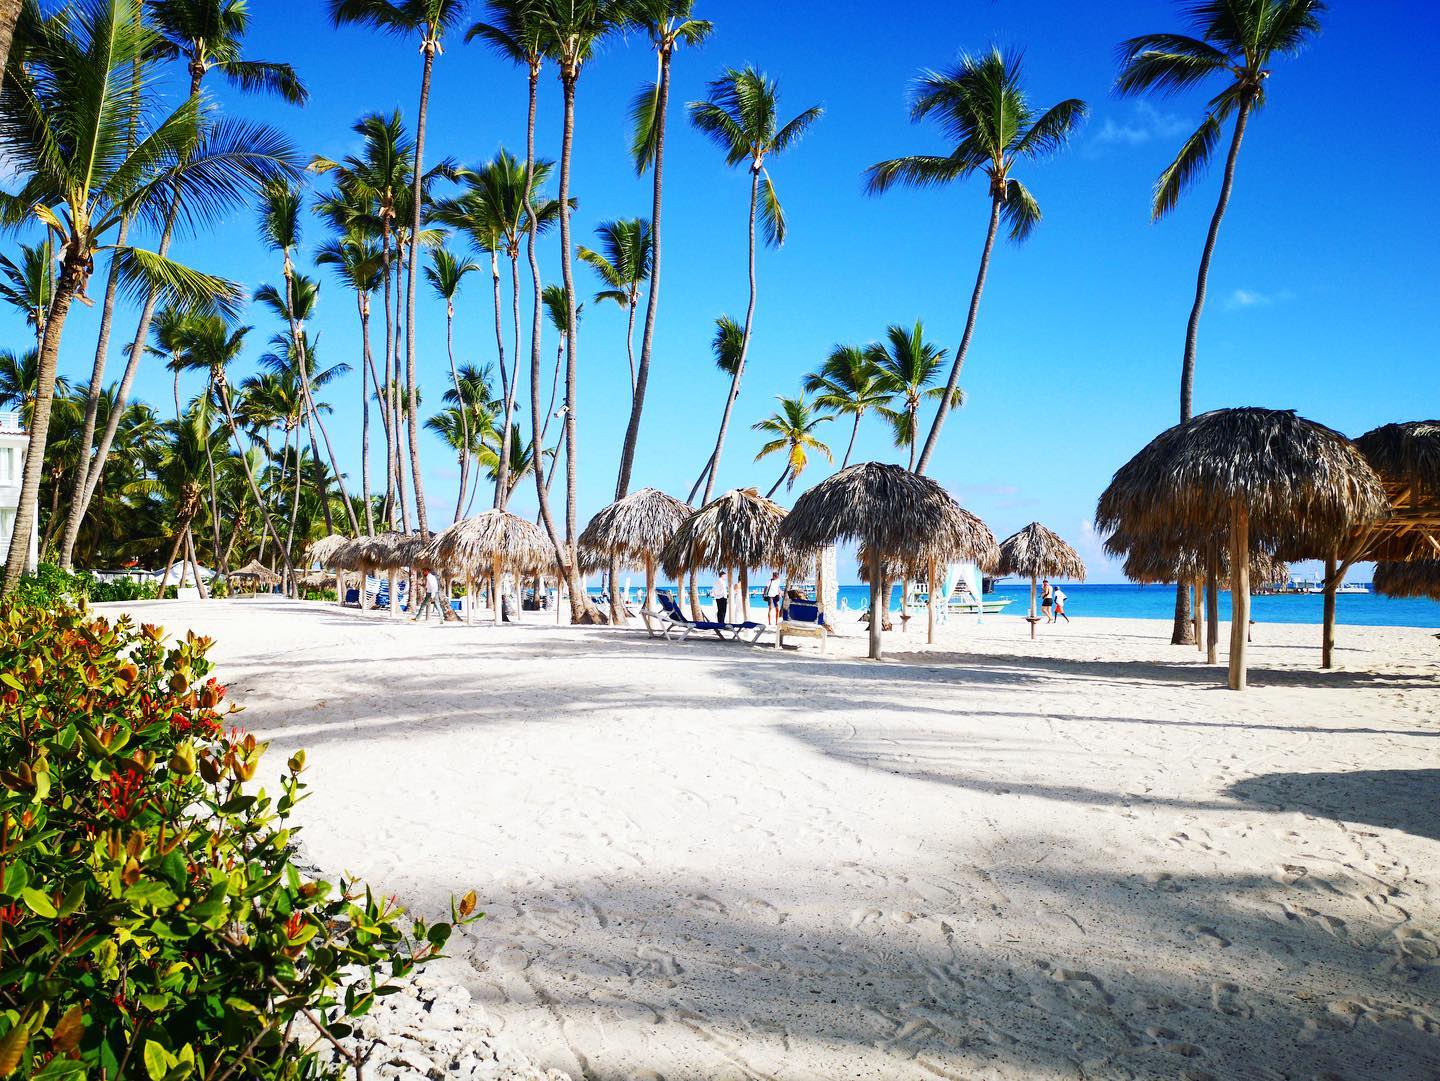 Where to go for Vacation Jamaica vs Punta Cana?